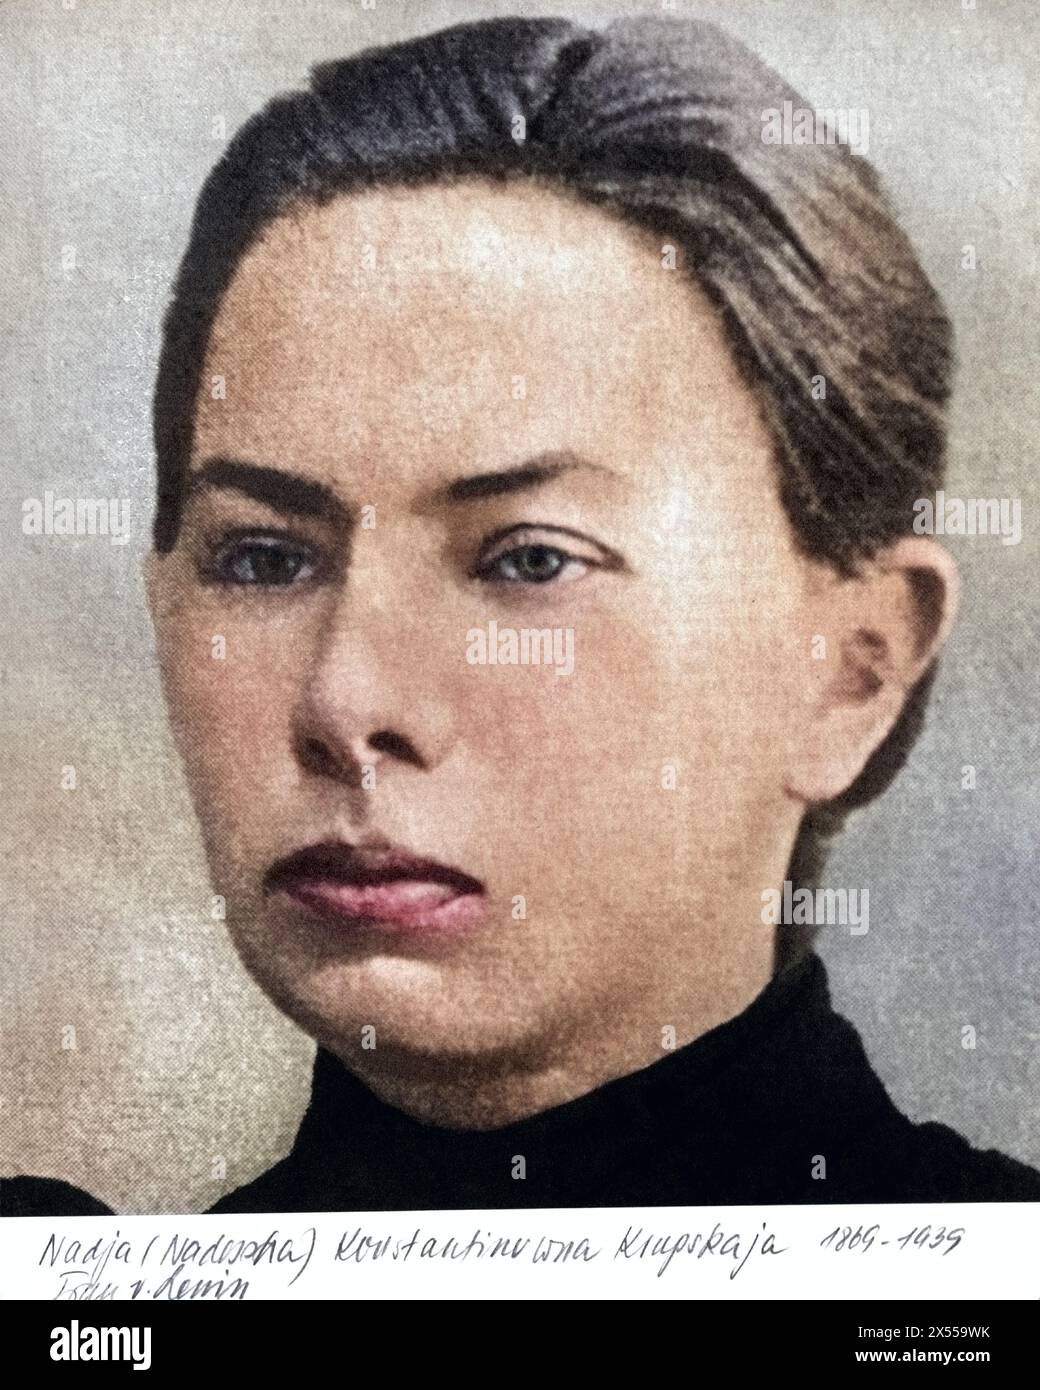 Krupskaja, Nadezhda Konstantinovna, 26.2.1869 - 27.2,1939, russischer Politiker, Porträt, ADDITIONAL-RIGHTS-CLEARANCE-INFO-NOT-AVAILABLE Stockfoto